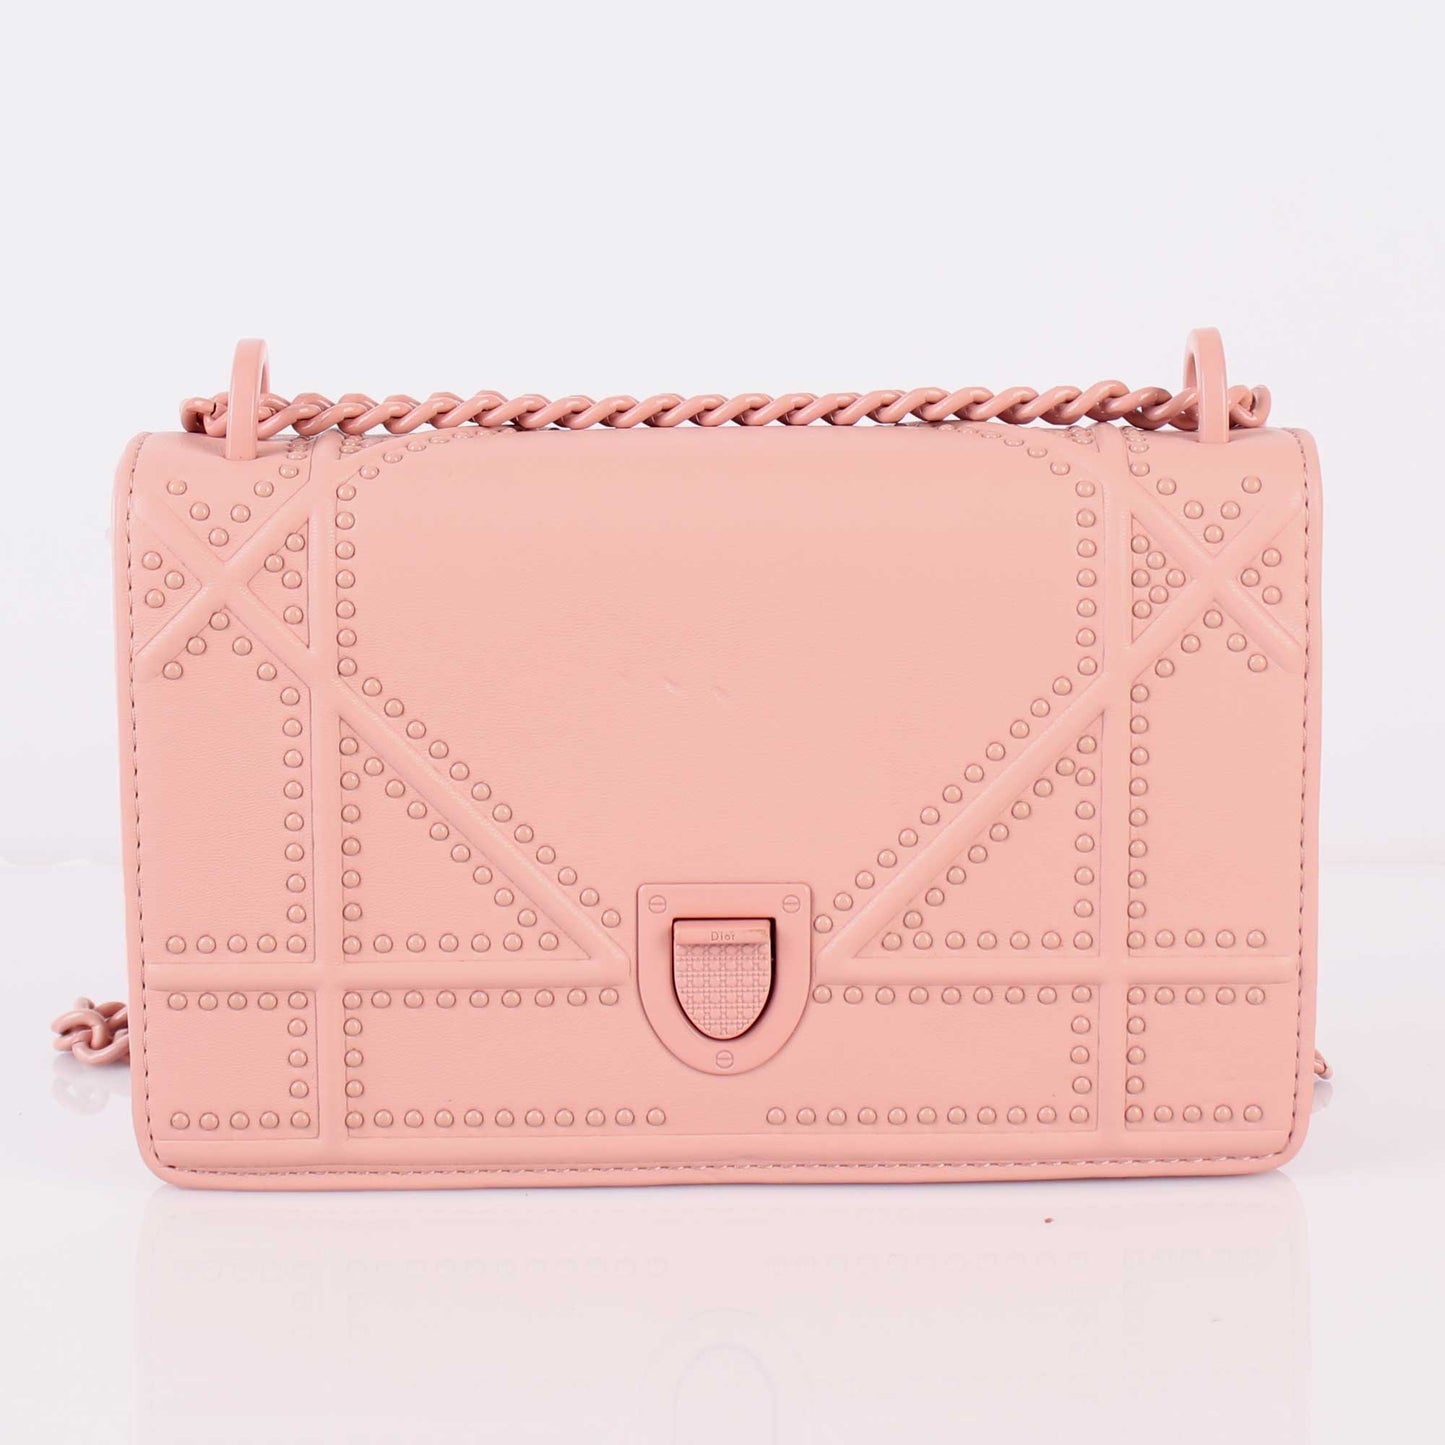 The Pricey Pearls Pink Sling Bag